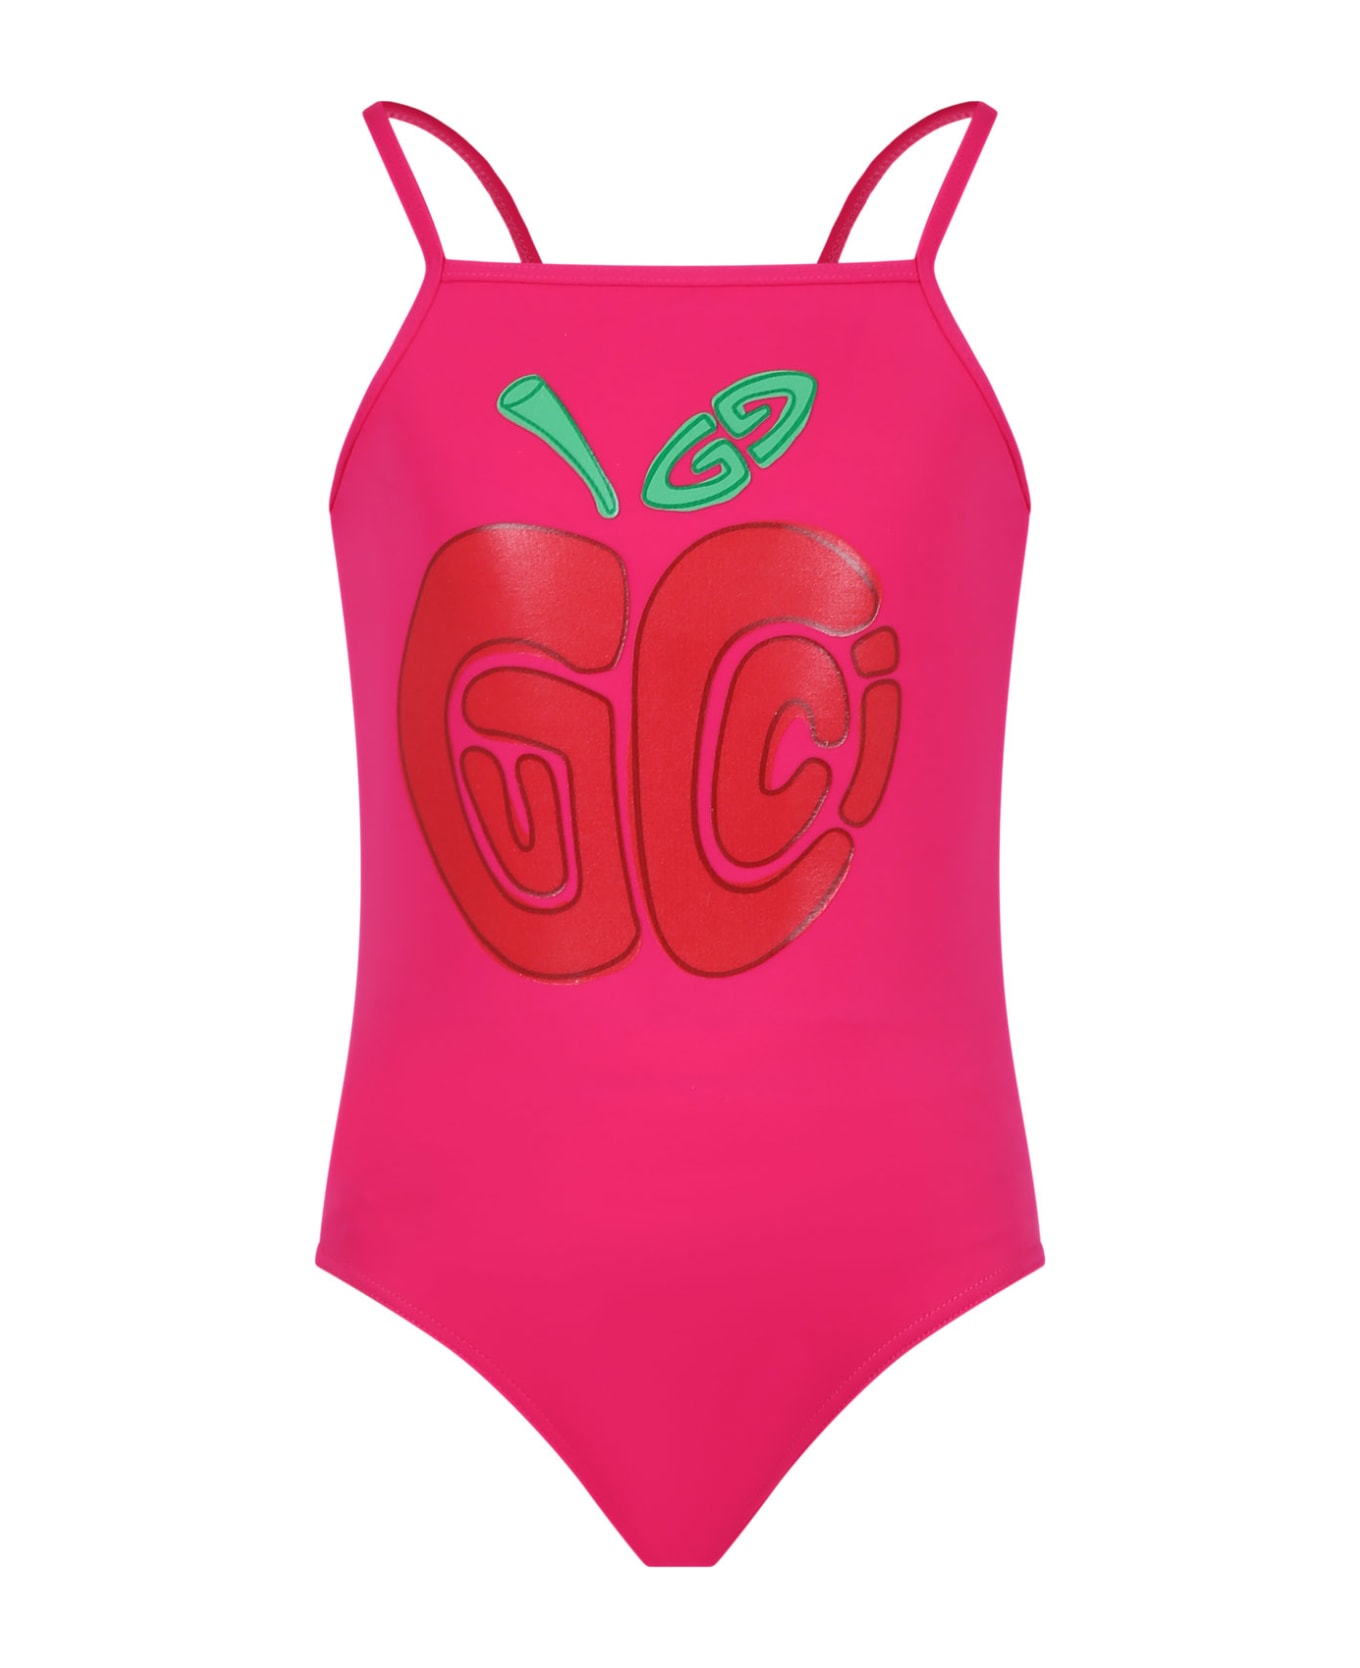 Gucci Fuchsia One-piece Swimsuit For Girl With Gucci Apple Print - Fuchsia 水着